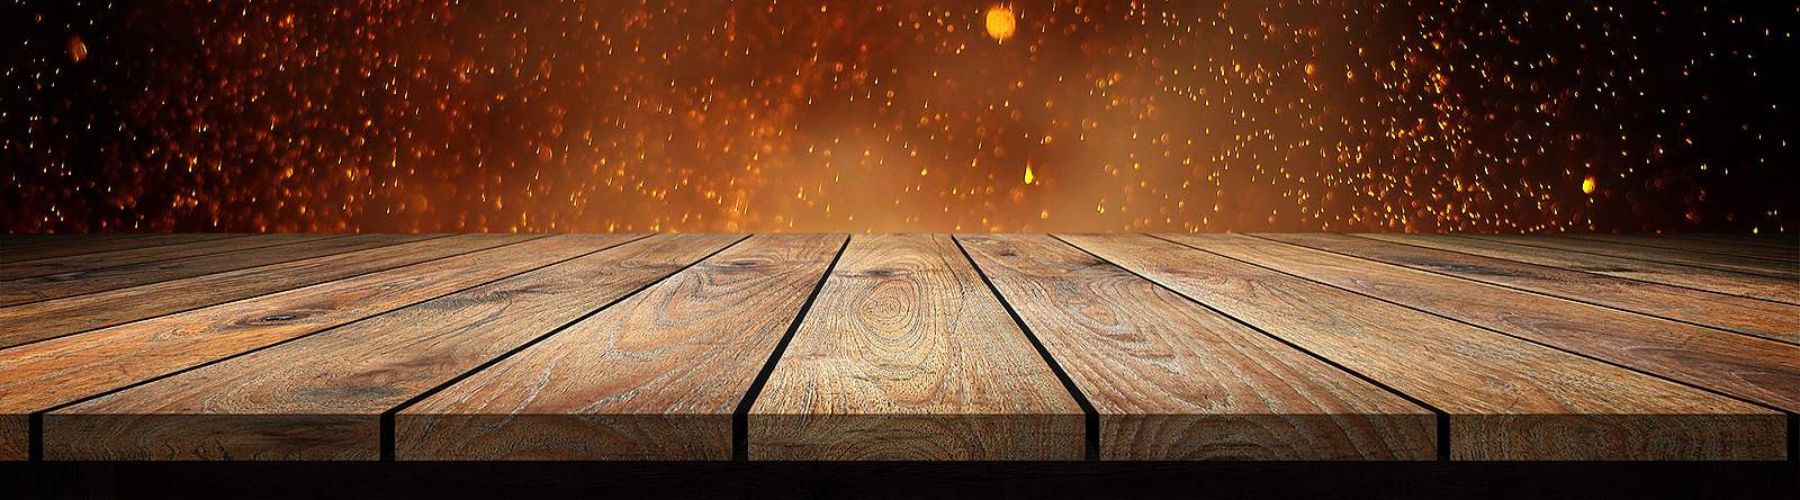 Fire Retardant Plywood | Austin Defender Fire Retardant Plywood